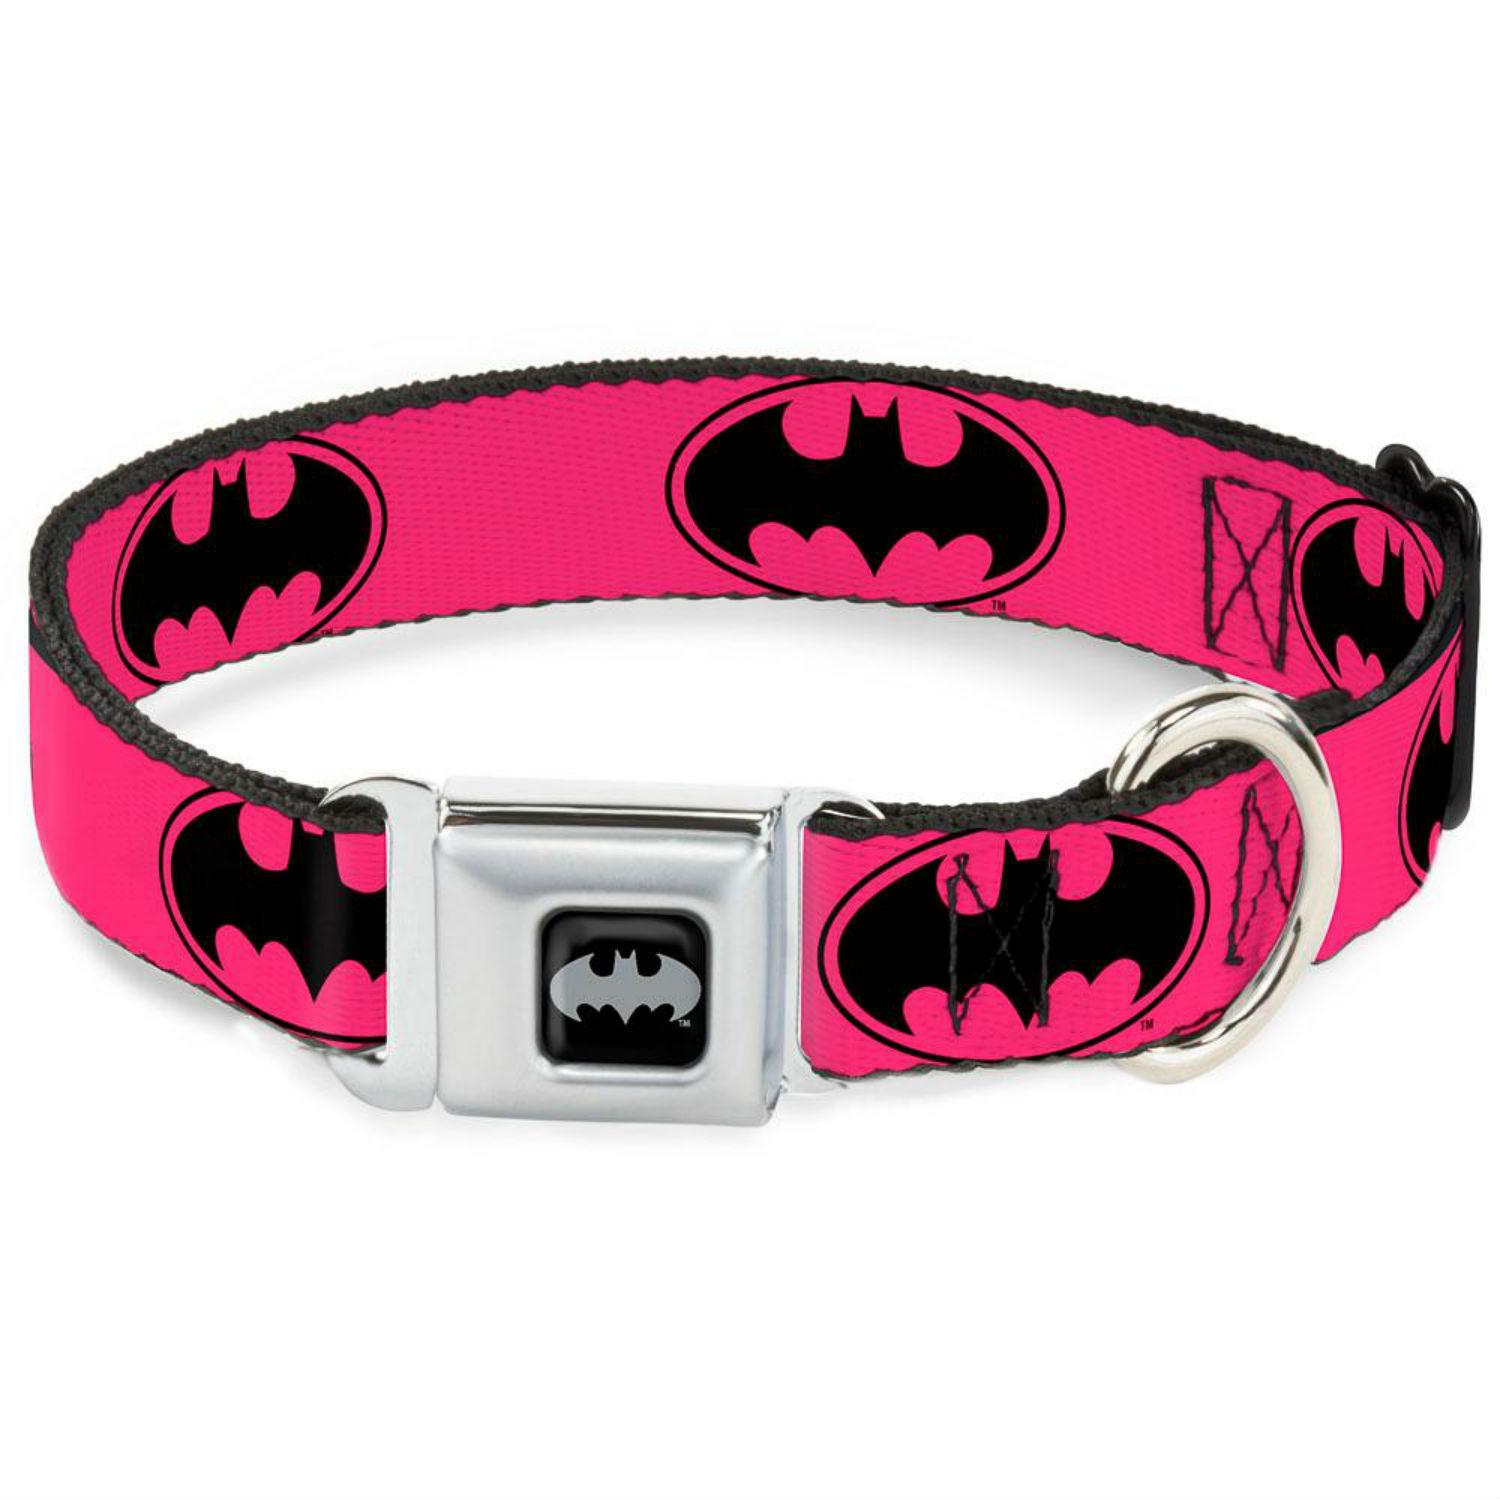 Batman Bat Signal Seatbelt Buckle Dog Collar by Buckle-Down - Black/Pink